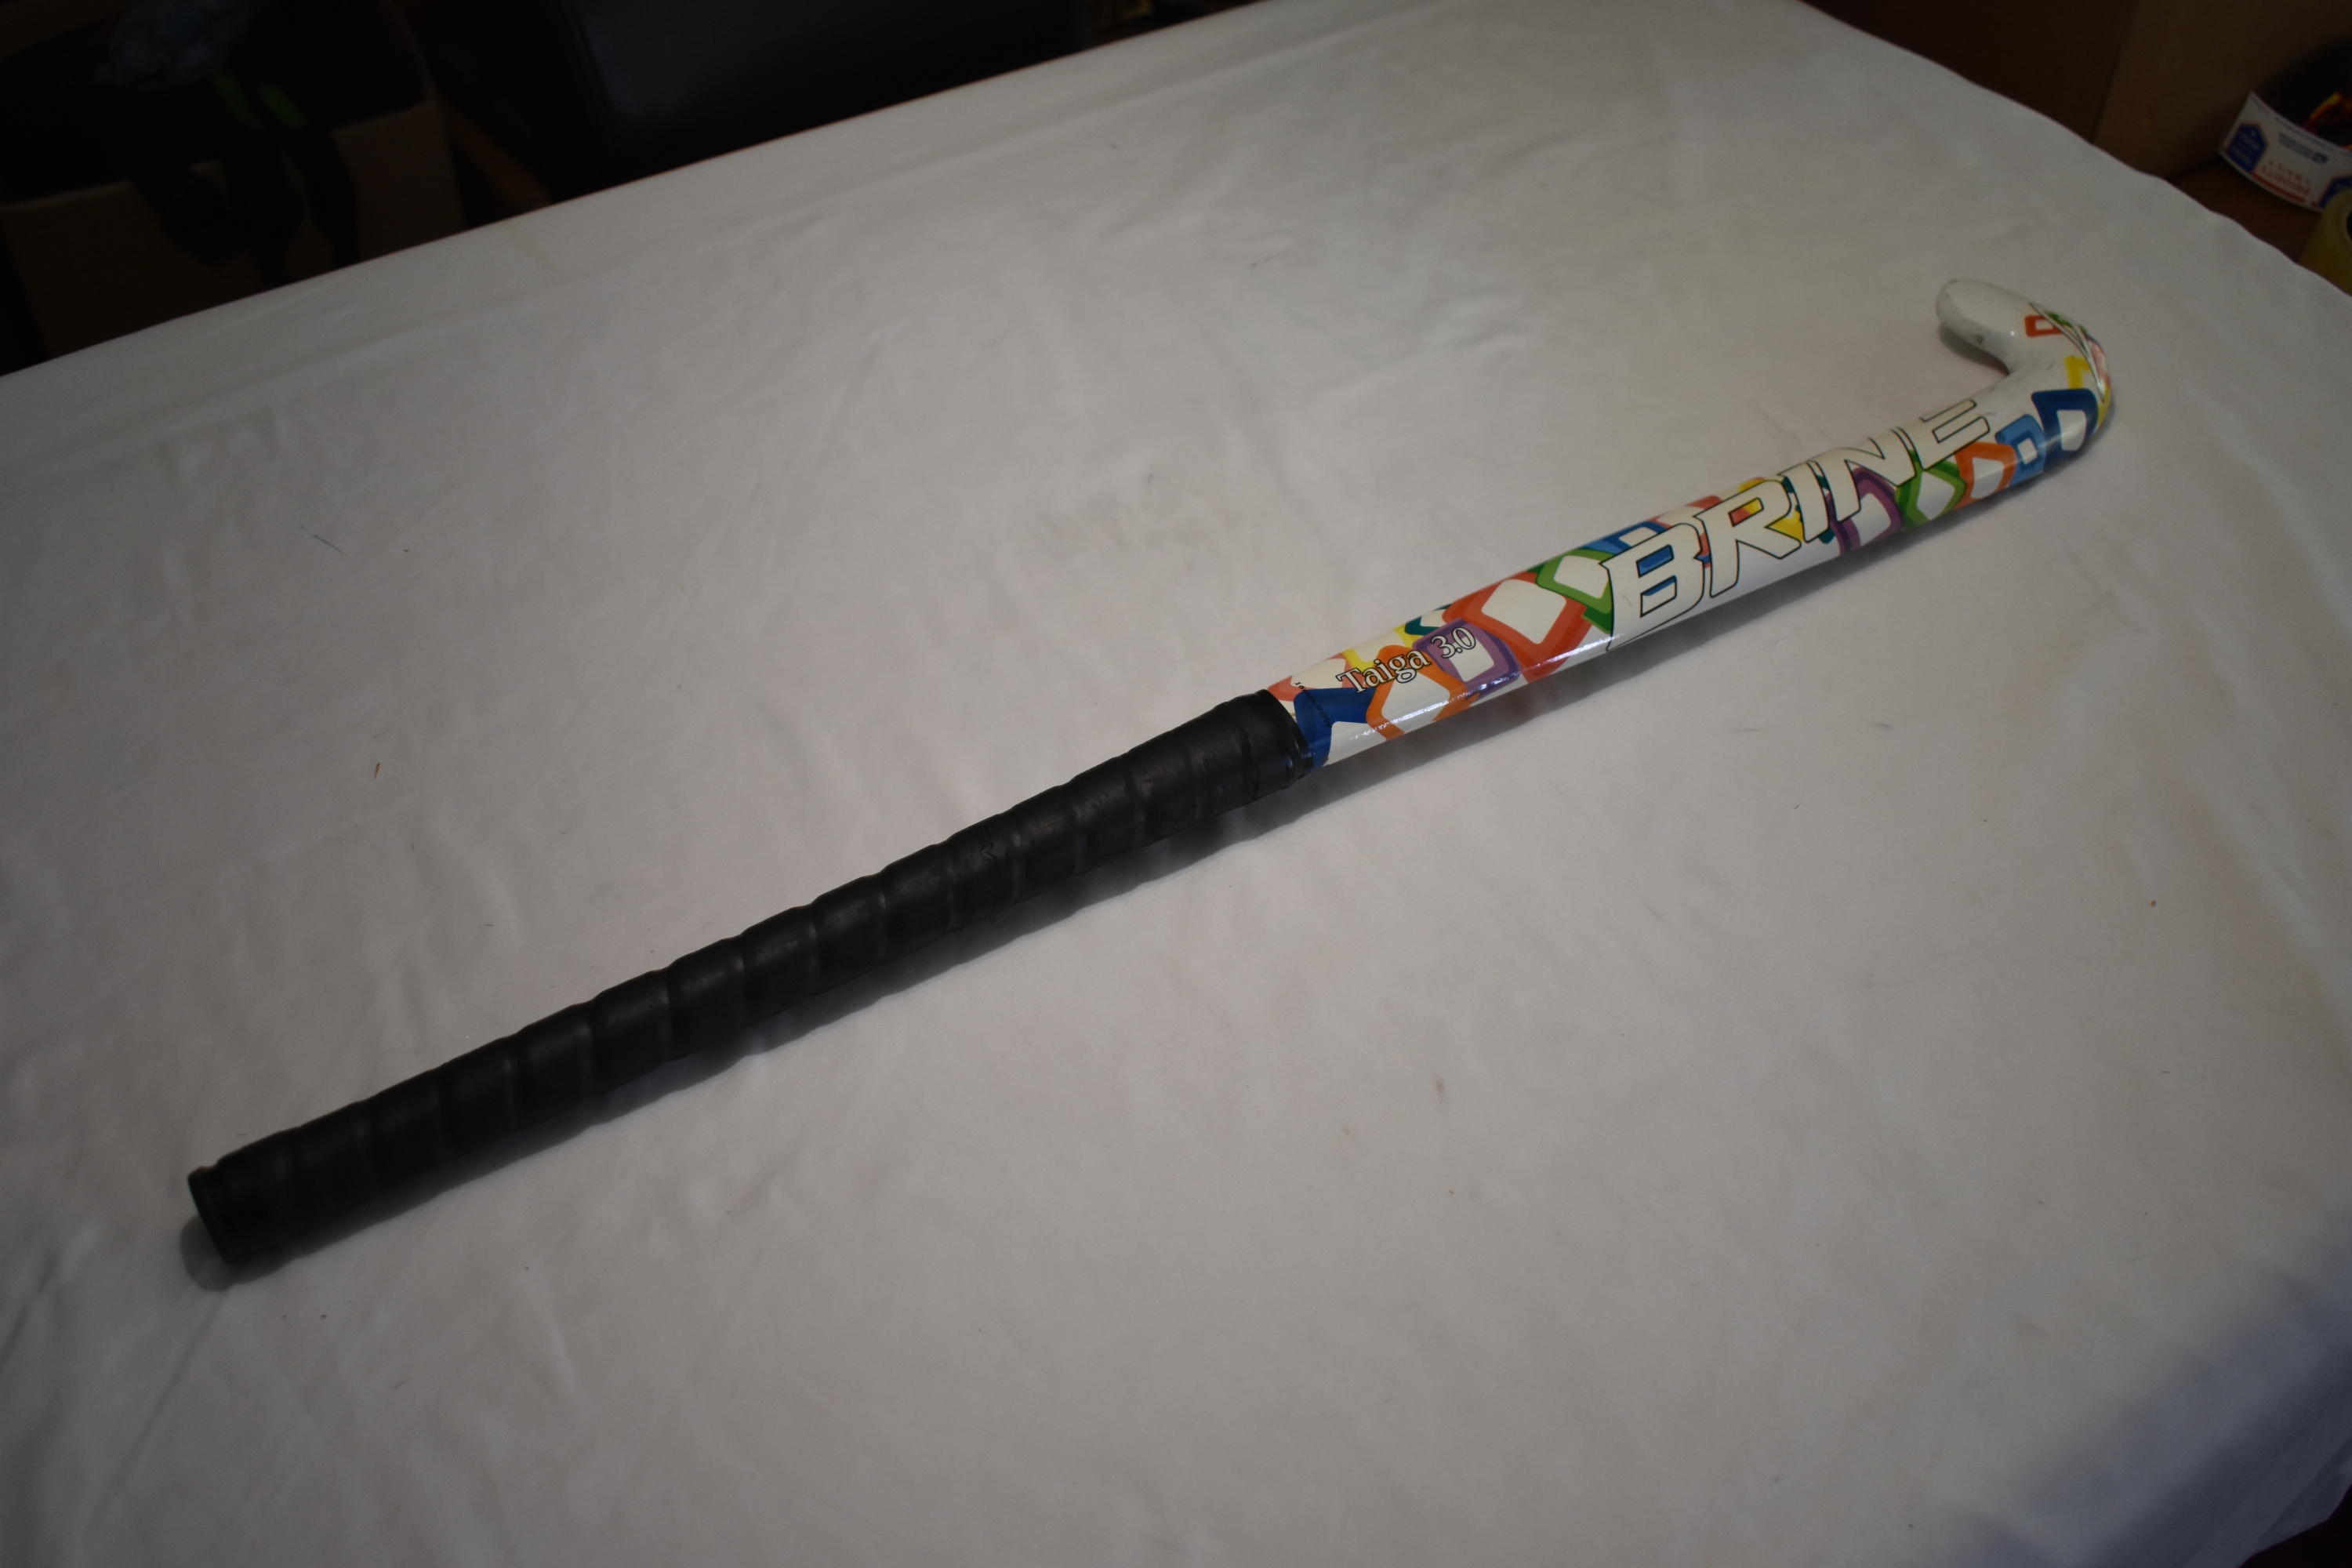 Brine Taiga 3.0 Field Hockey Stick, 34 Inches